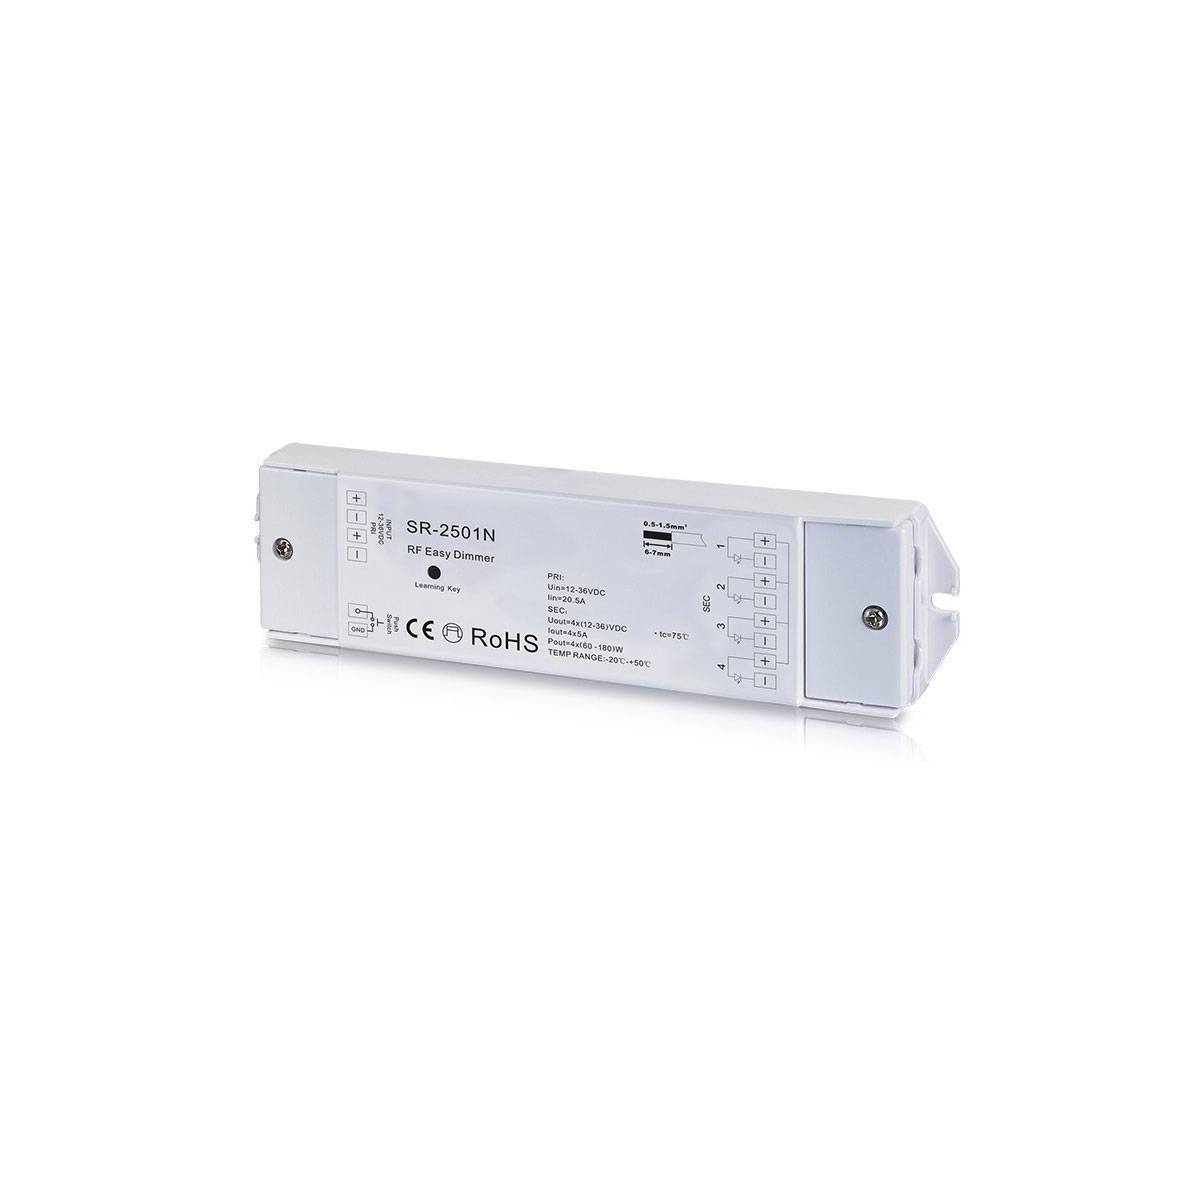 Controllore PWM 12-36V-DC monocolore (4 canali, 5A/canale) Ricevitore RF - Easy RF